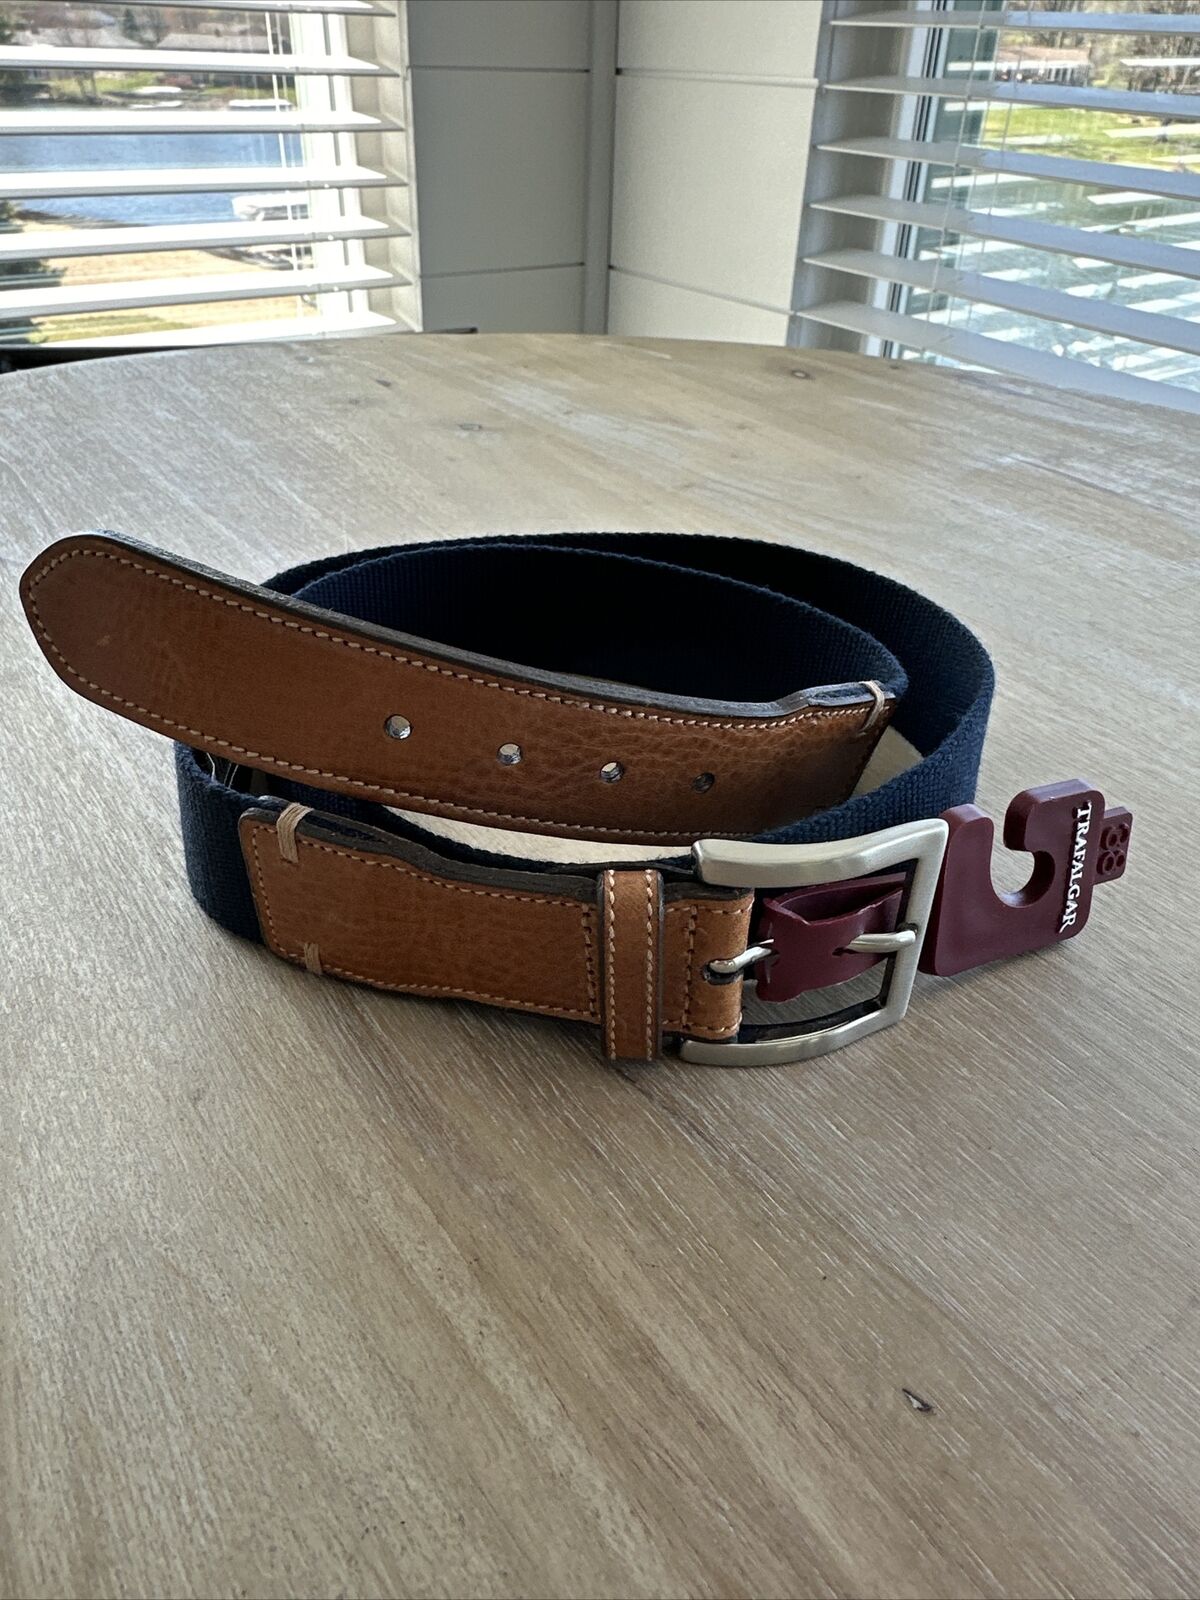 Trafalgar Vintage USA Made Leather Canvas Belt Made In USA Size 38” Navy Blue